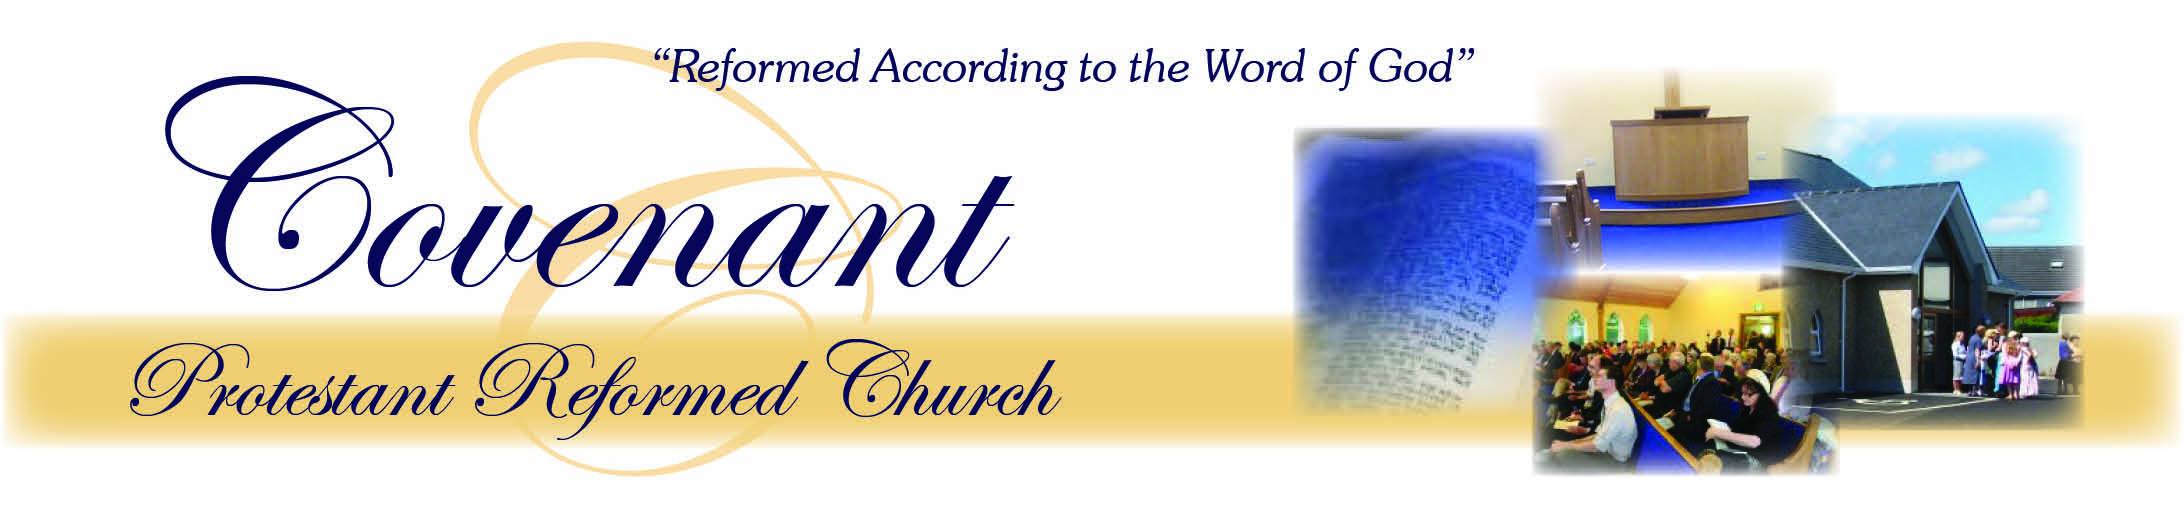 Covenant Protestant Reformed Church